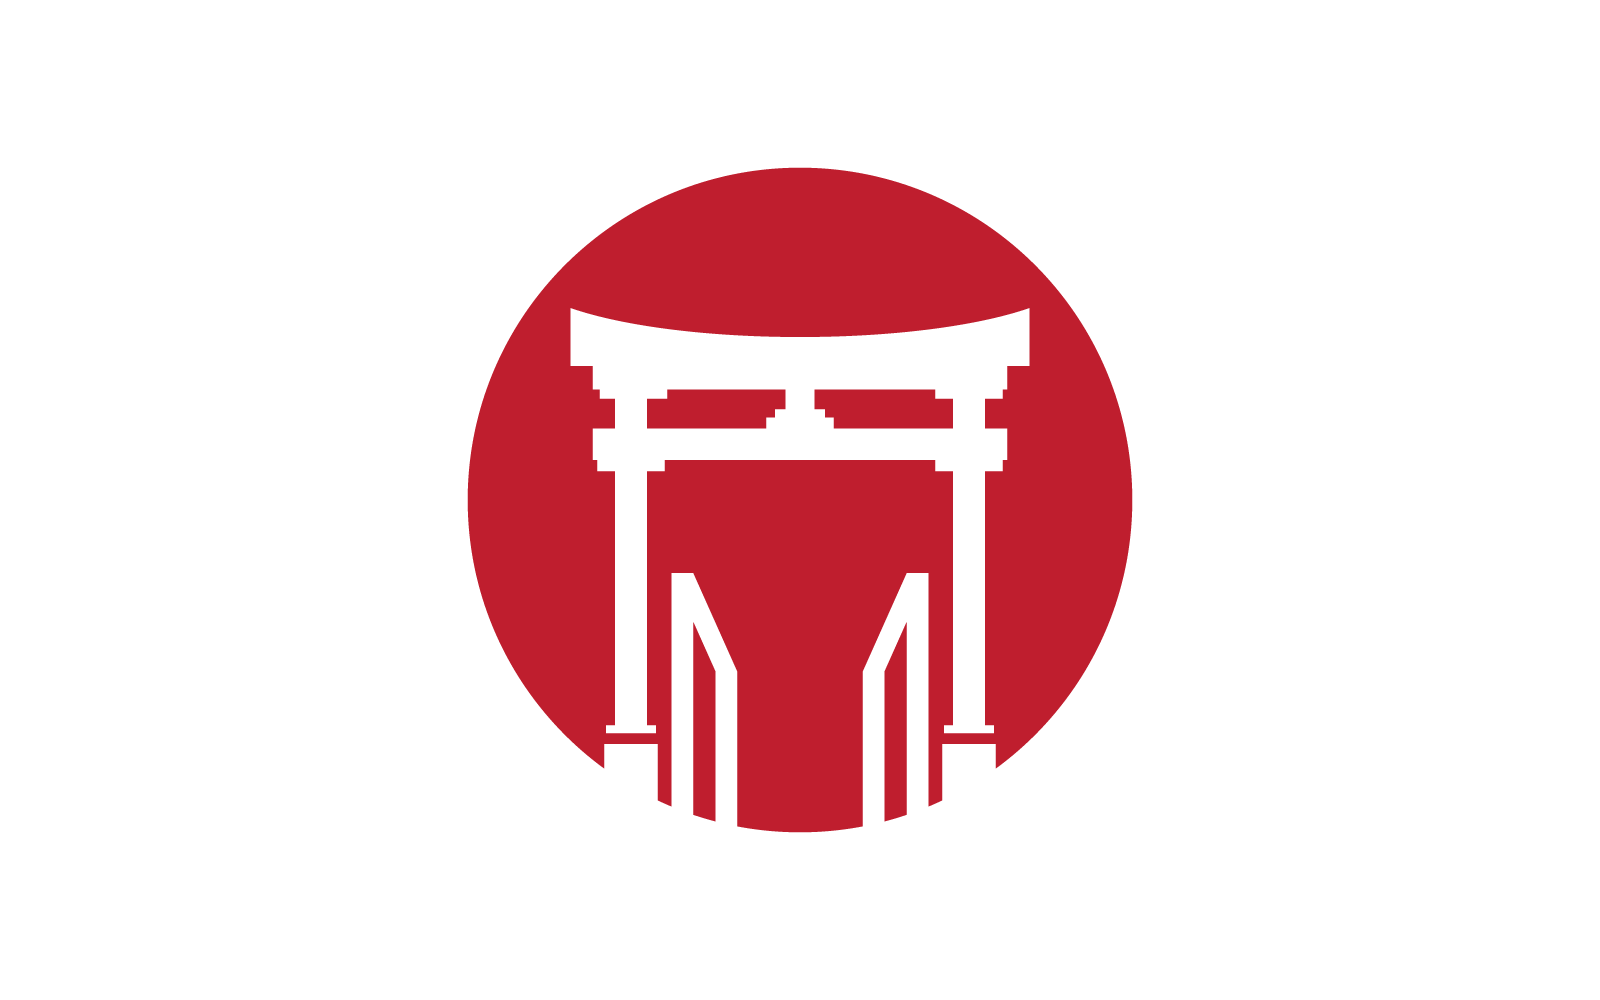 Torii gate illustration logo vector design template Logo Template